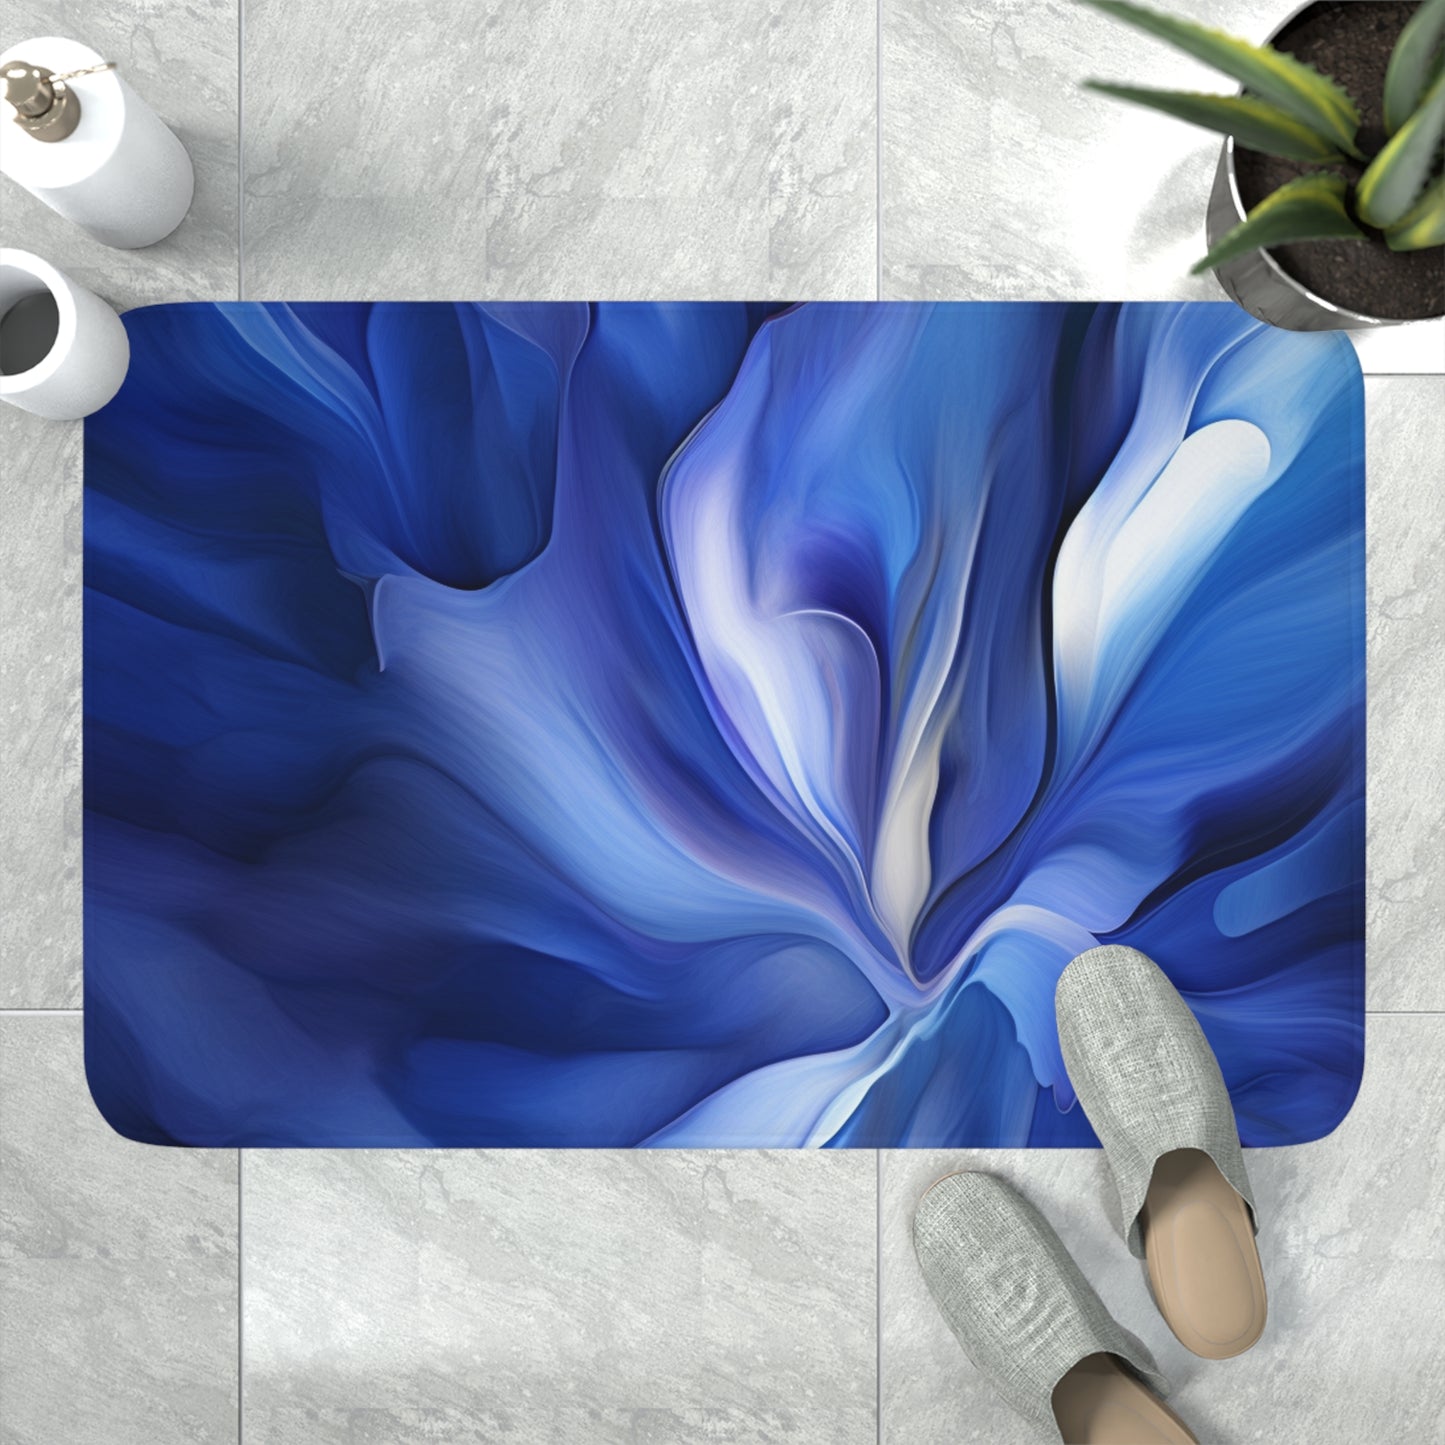 Memory Foam Bath Mat Abstract Blue Tulip 3